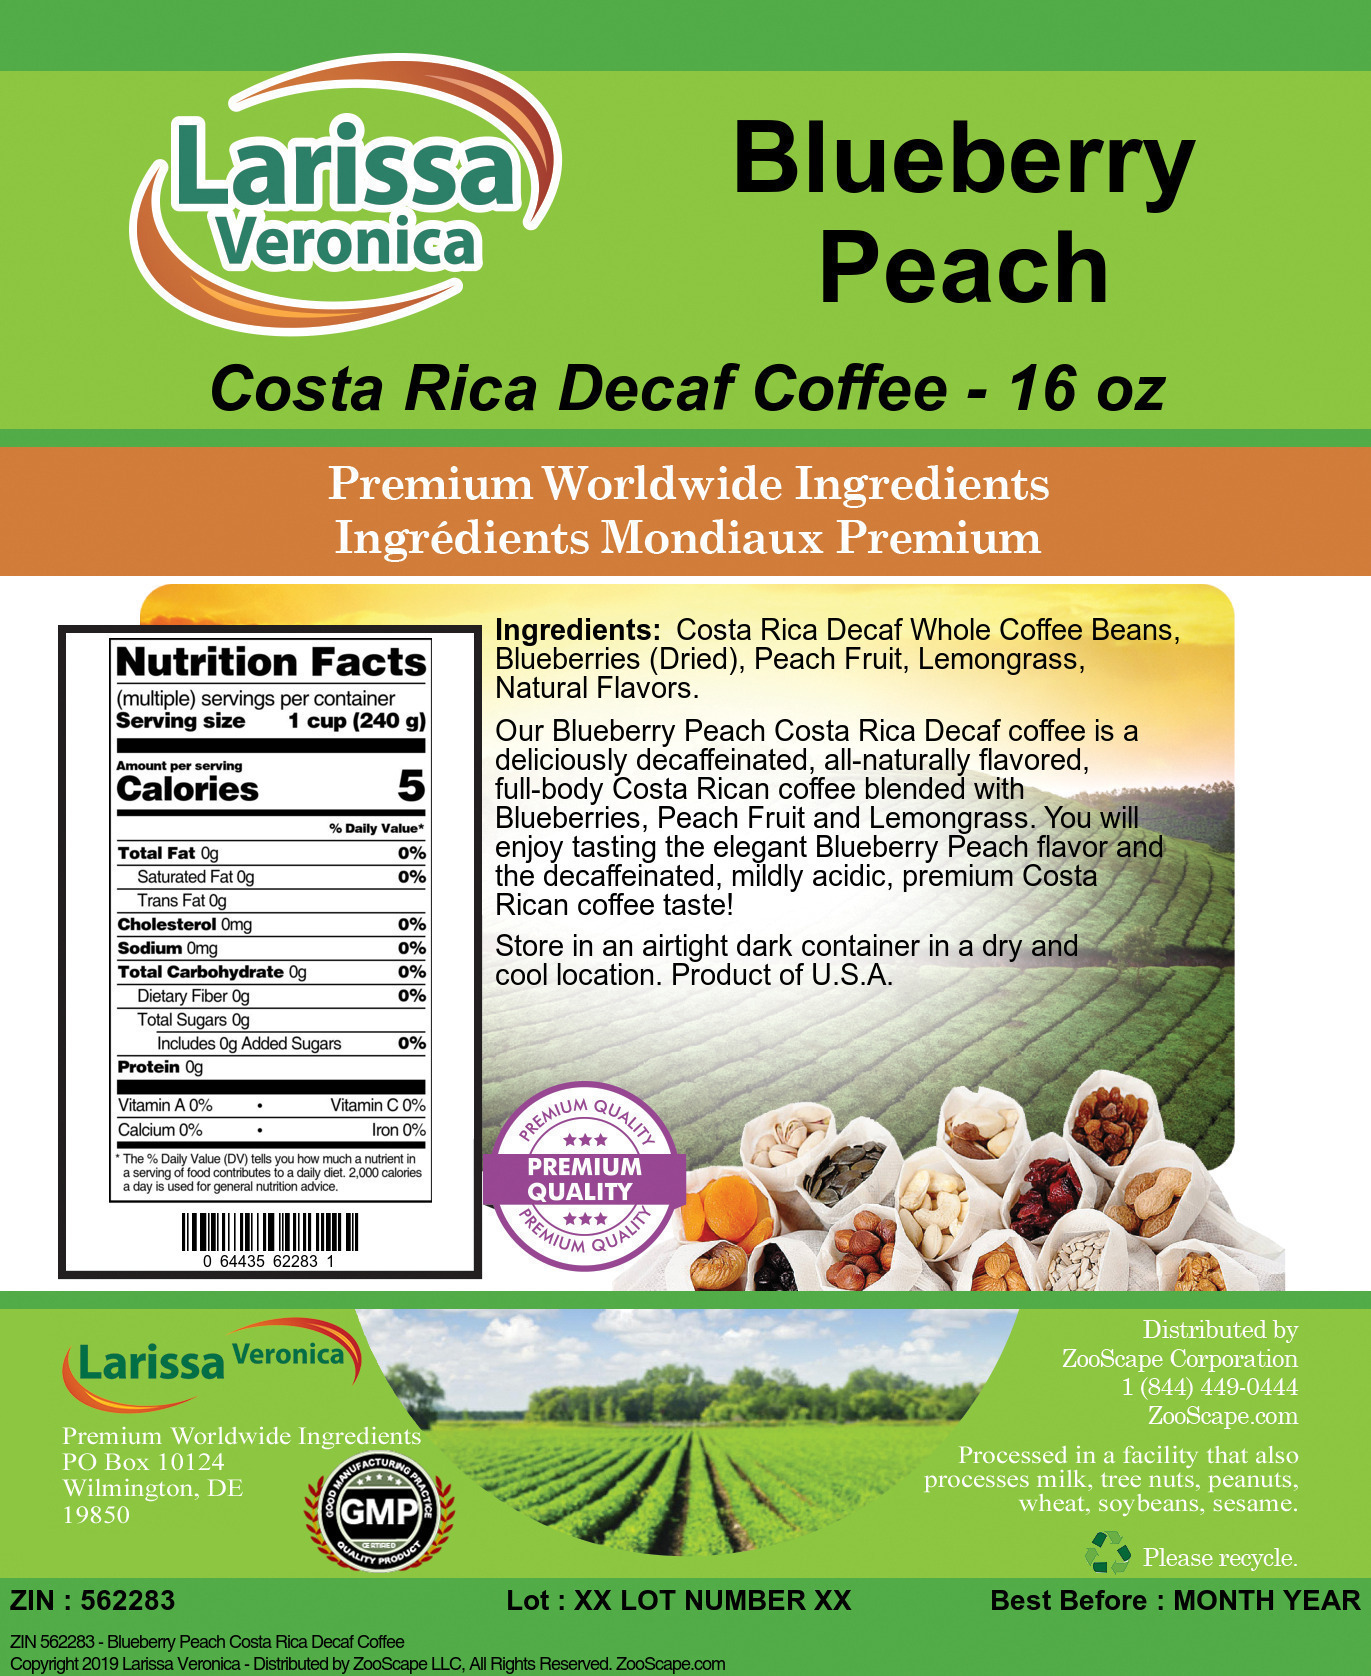 Blueberry Peach Costa Rica Decaf Coffee - Label